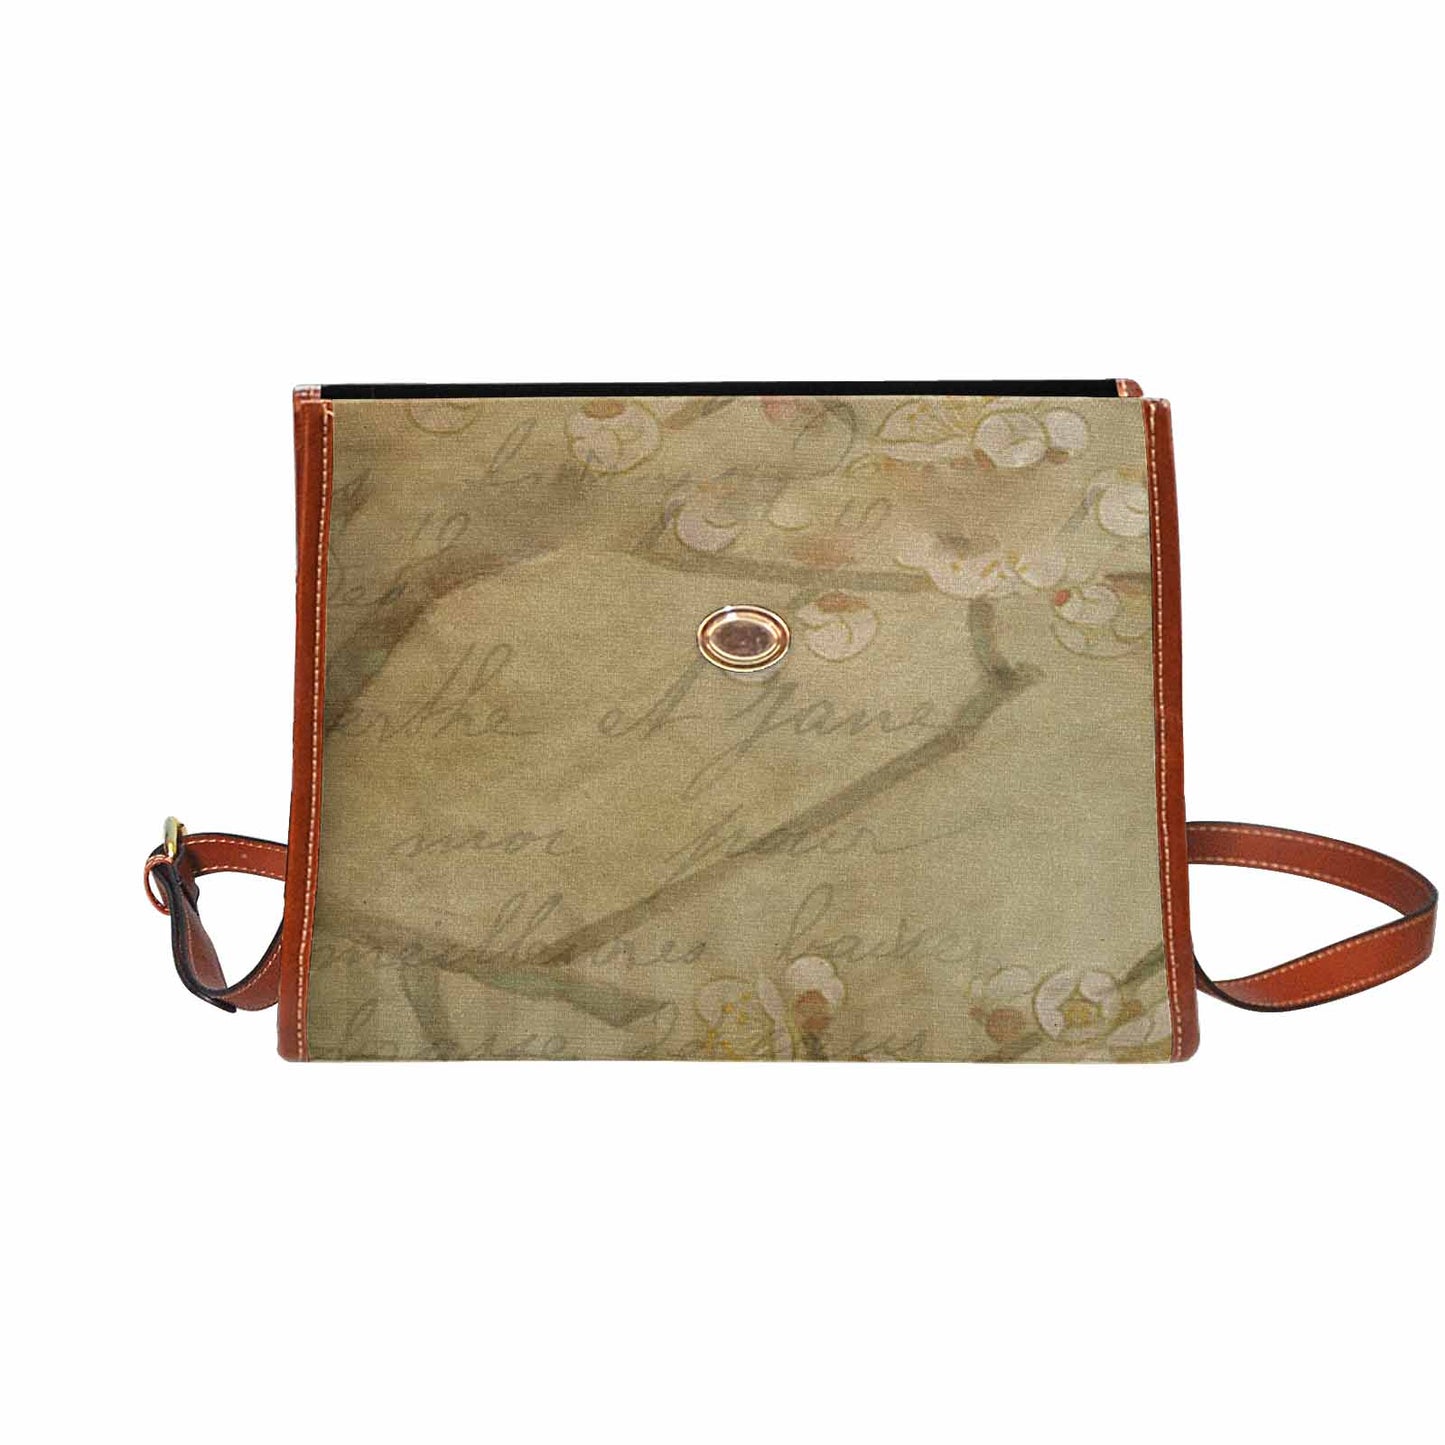 Antique handbag, MODEL 1695361, Design 03